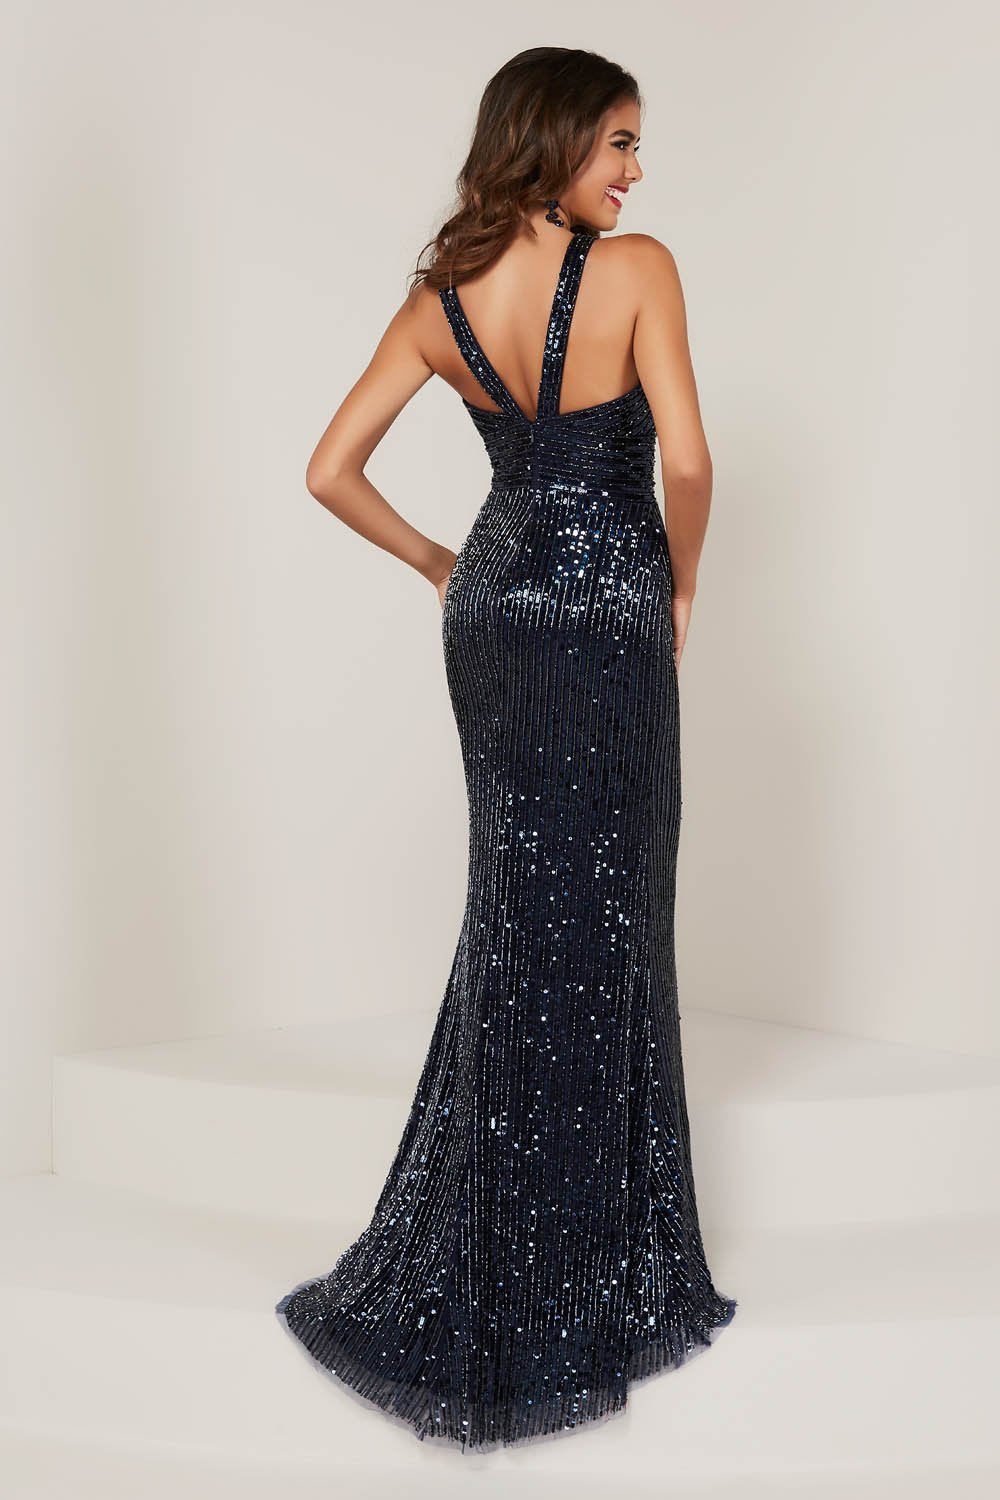 Tiffany 16331 Dress - Formal Approach - Tiffany Prom Dresses